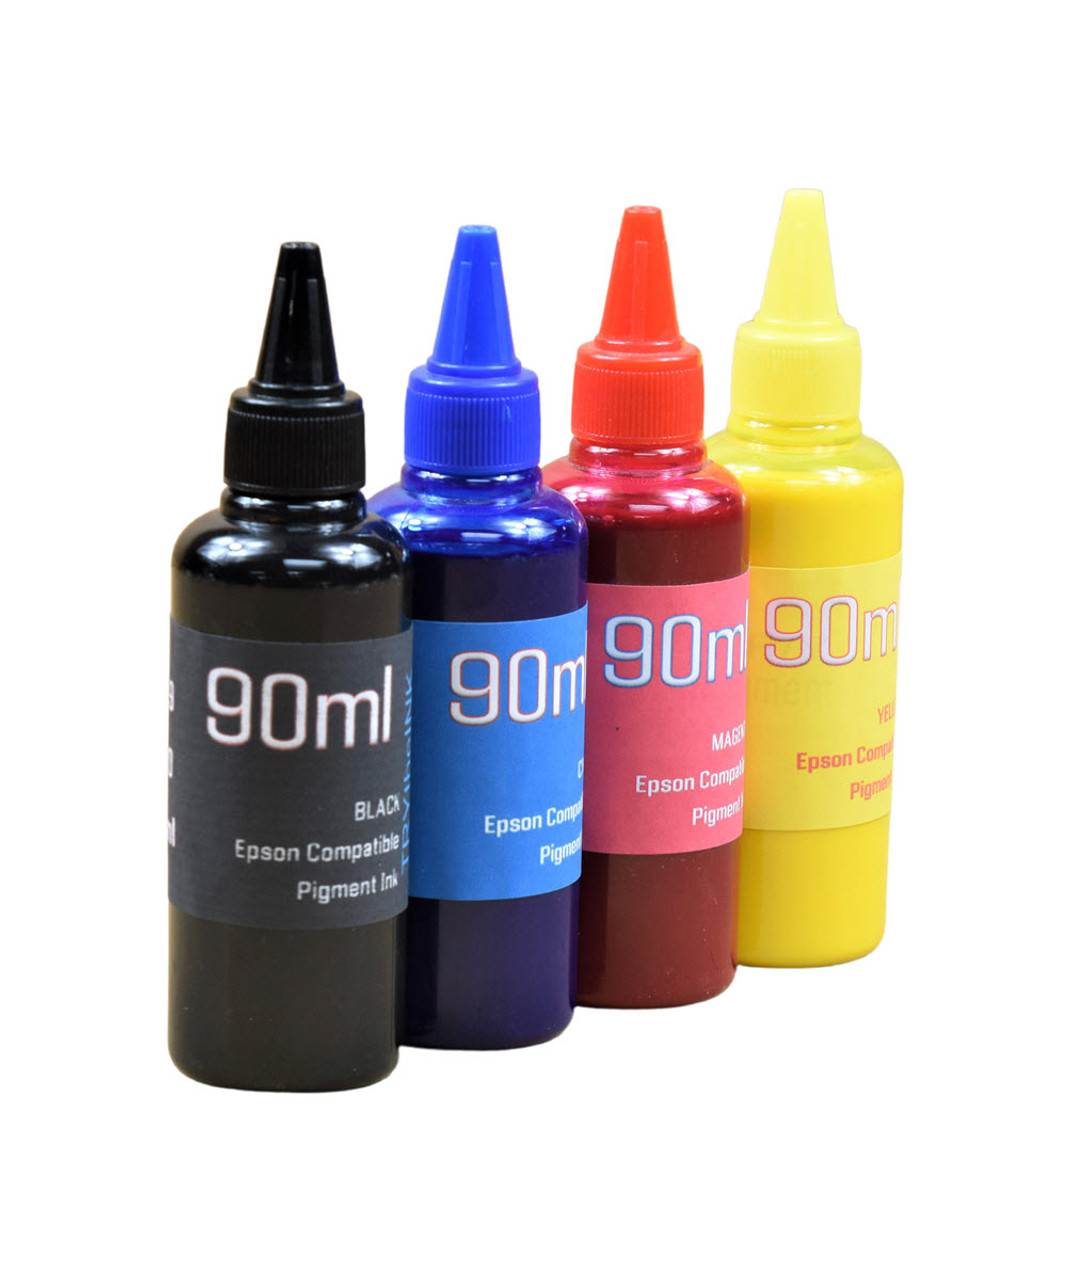 4 Bottles Pigment Ink 90ml each Color for Epson WorkForce Pro WF-7310, WF-7820, WF-7840 Printers